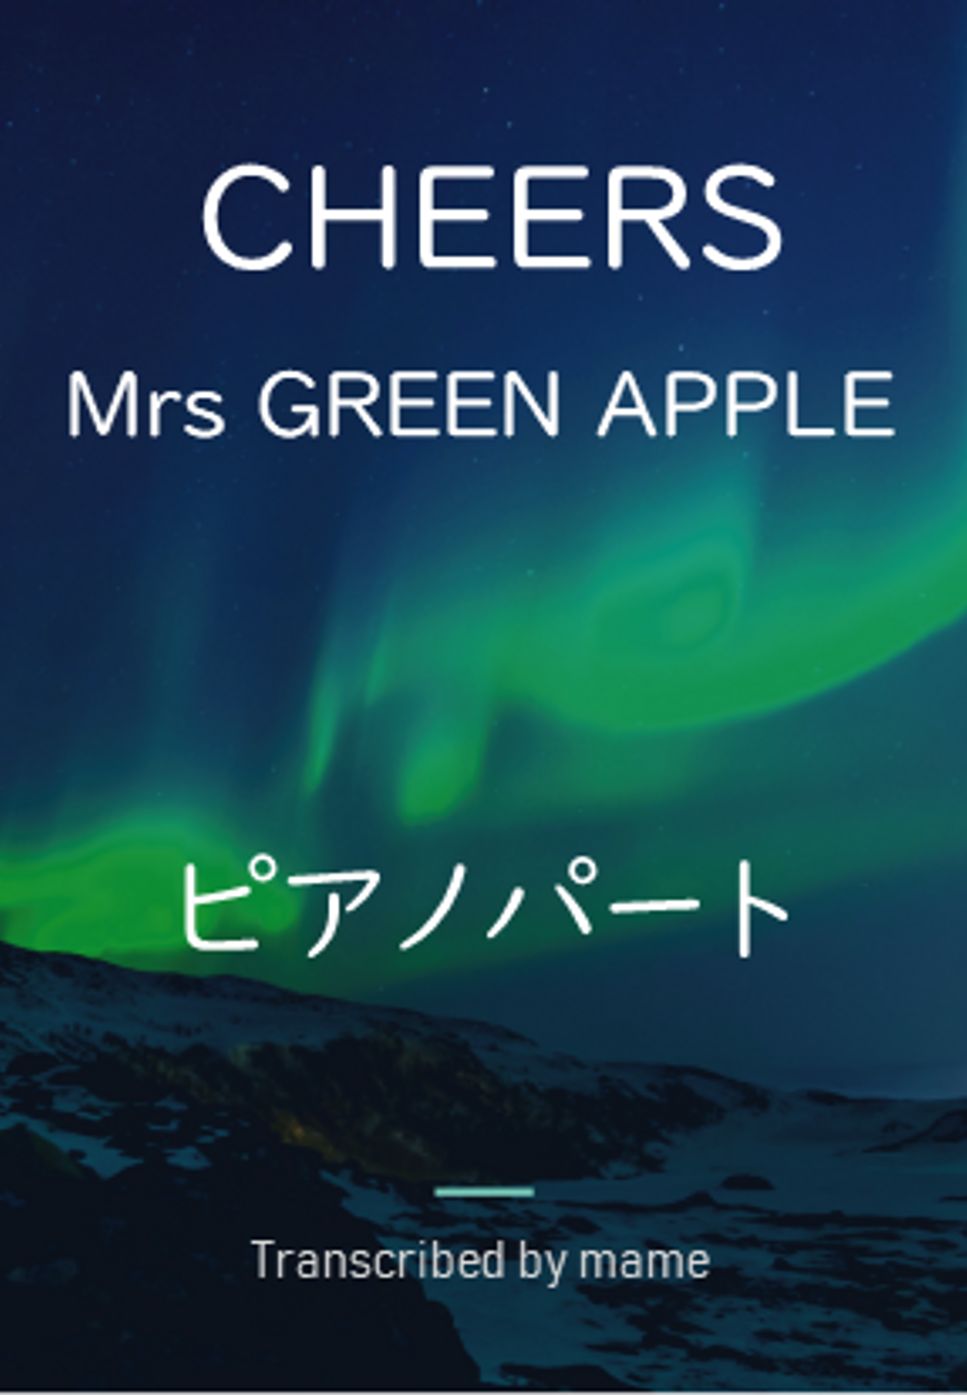 Mrs GREEN APPLE - CHEERS (ピアノパート) by mame